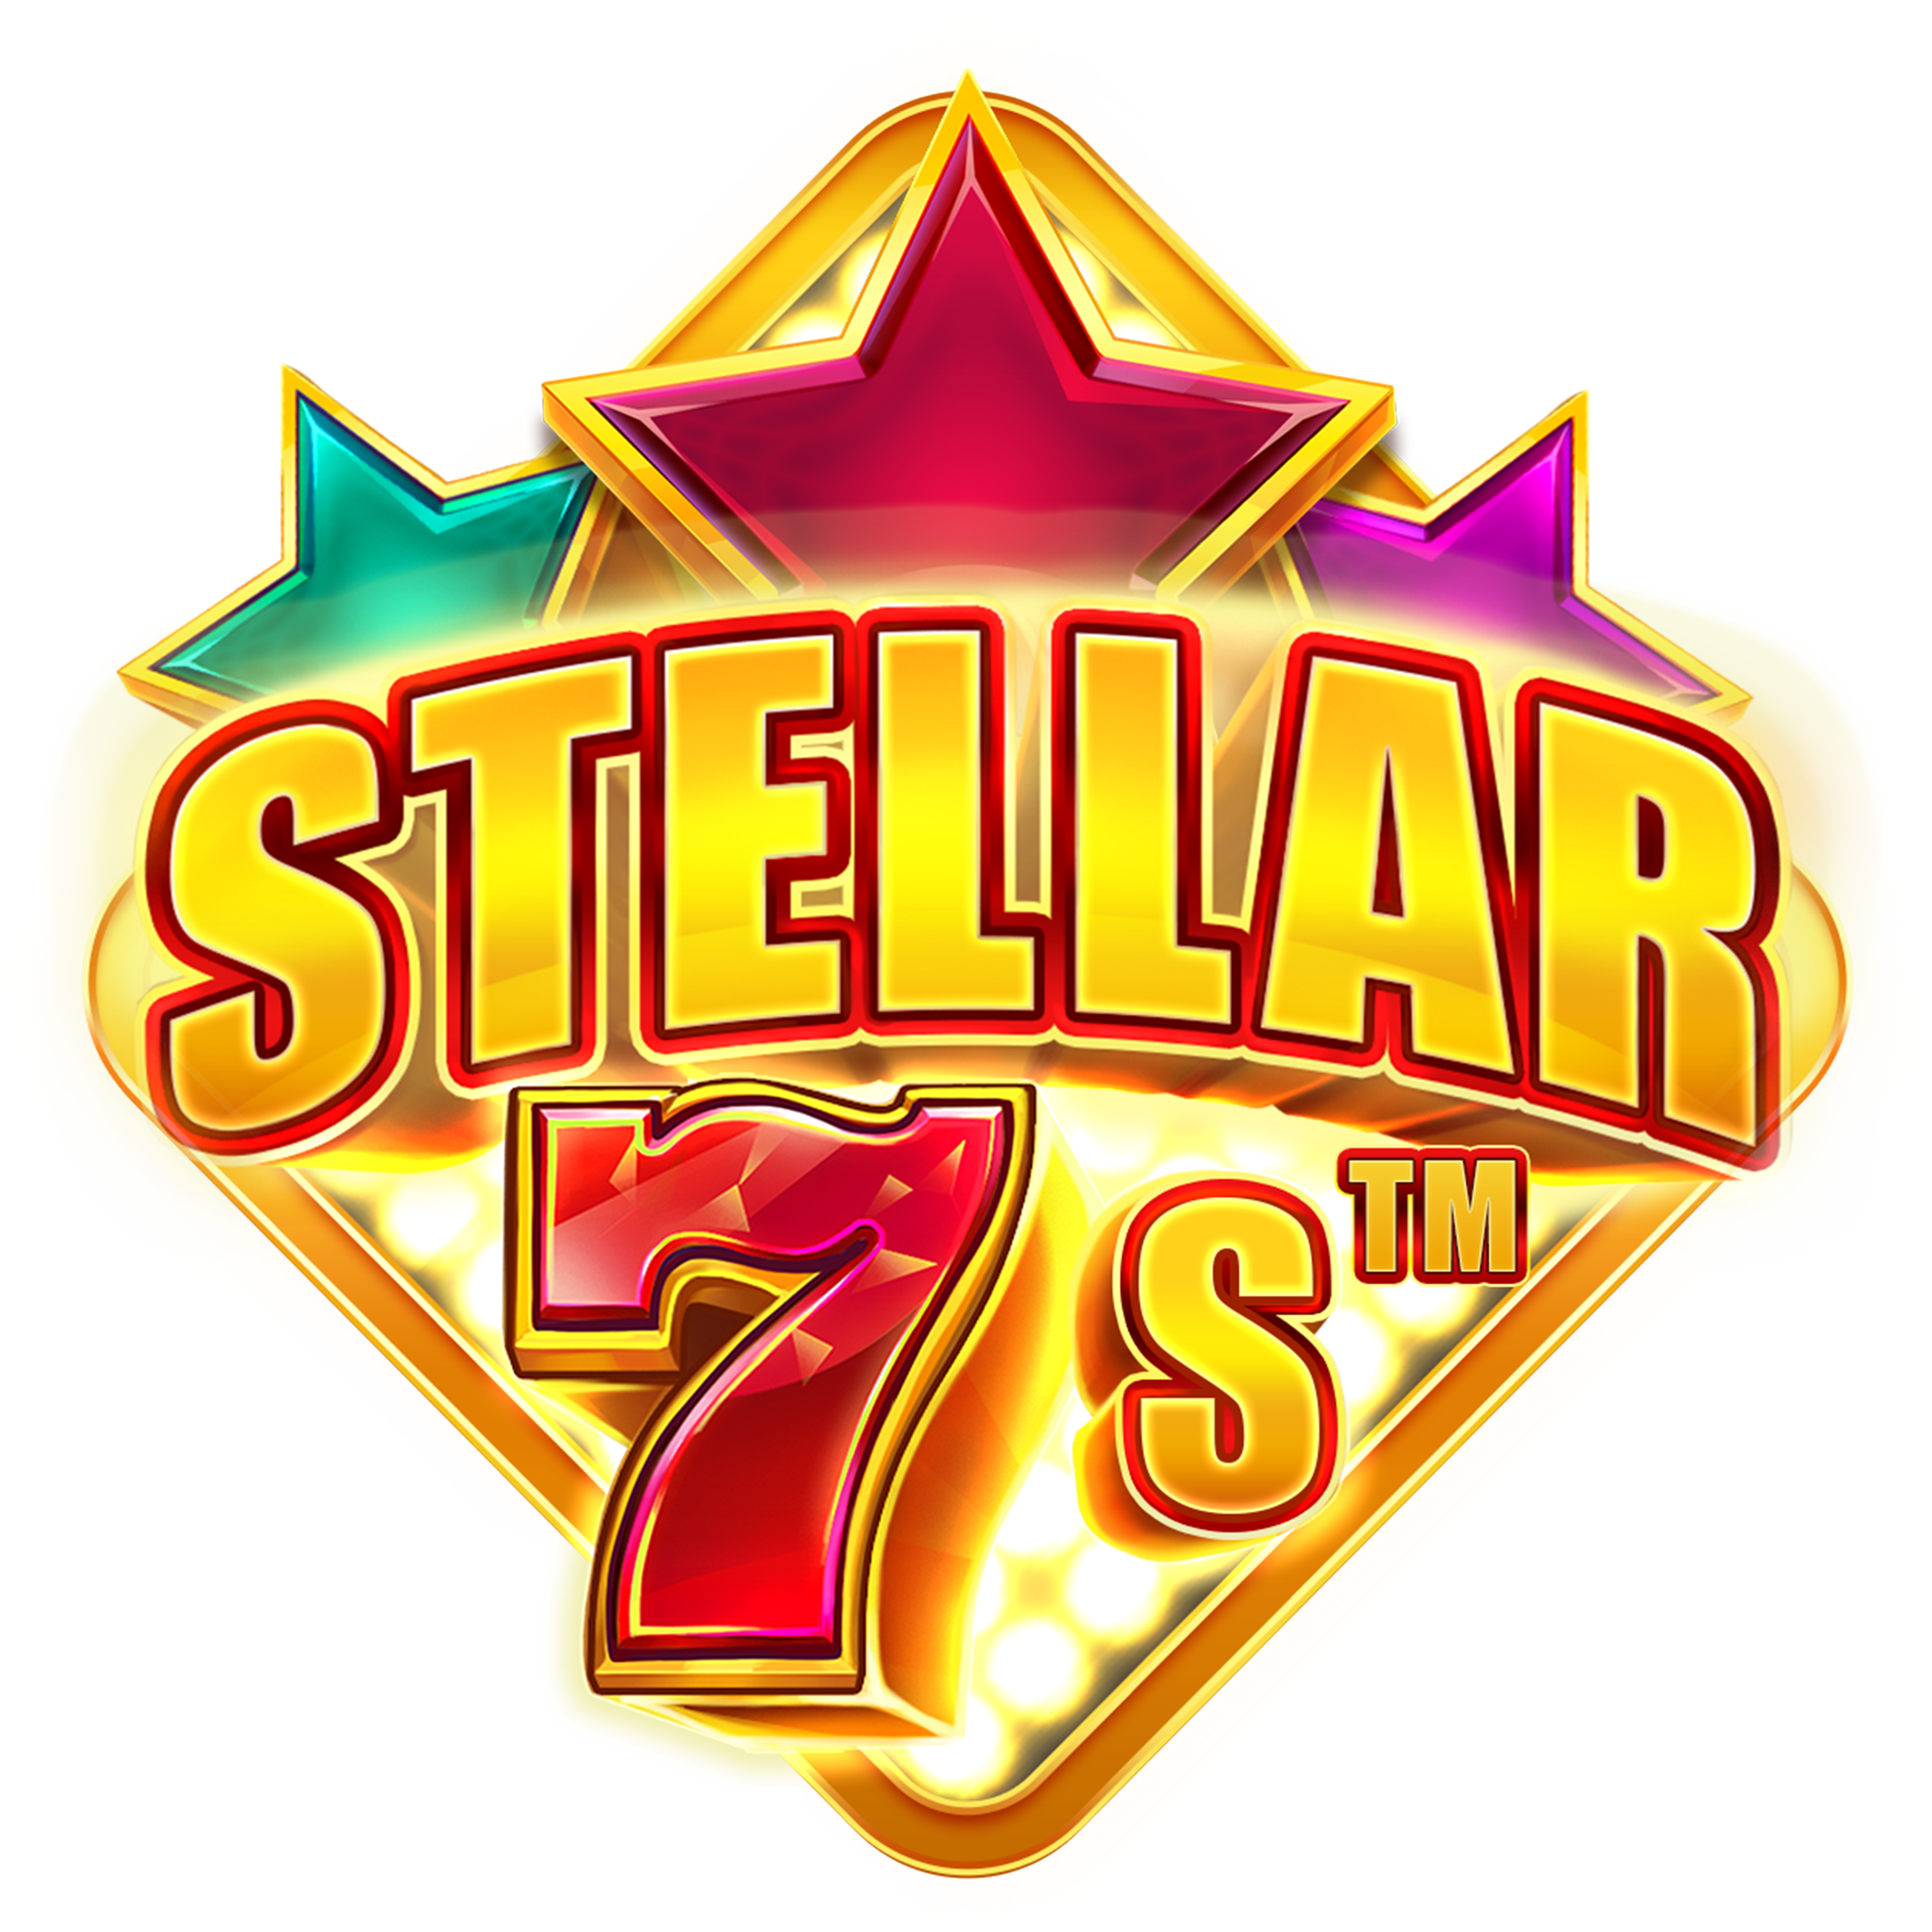 Stellar 7s Slot logo